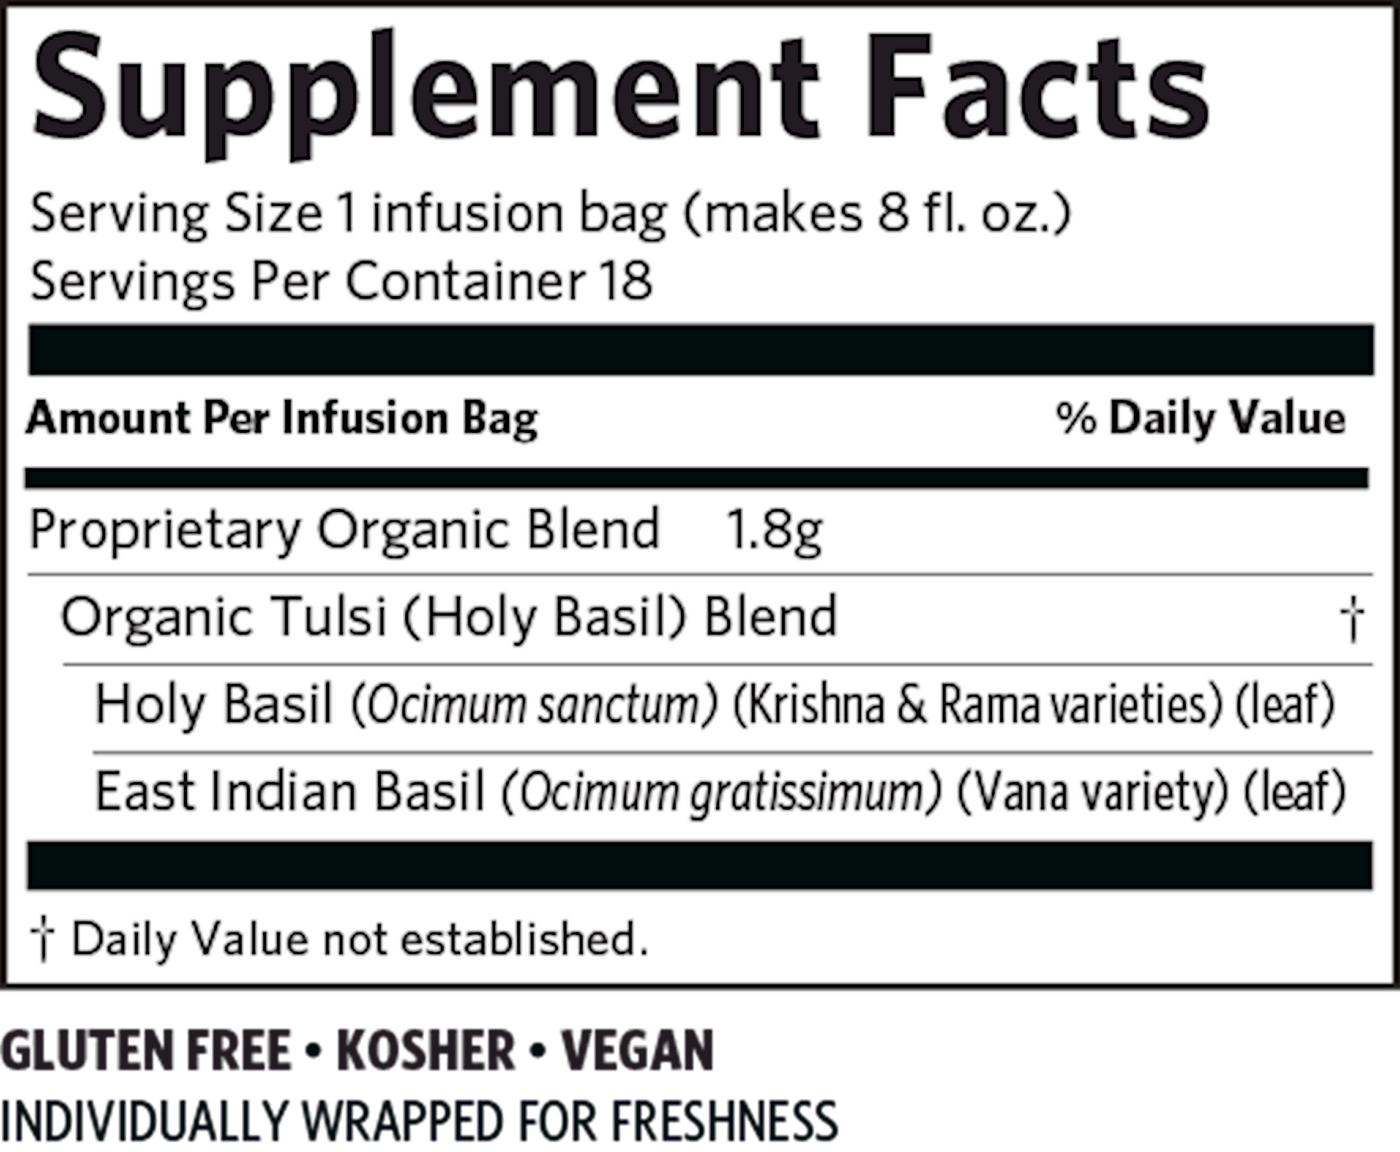 Tulsi Tea Original 18 bags Curated Wellness